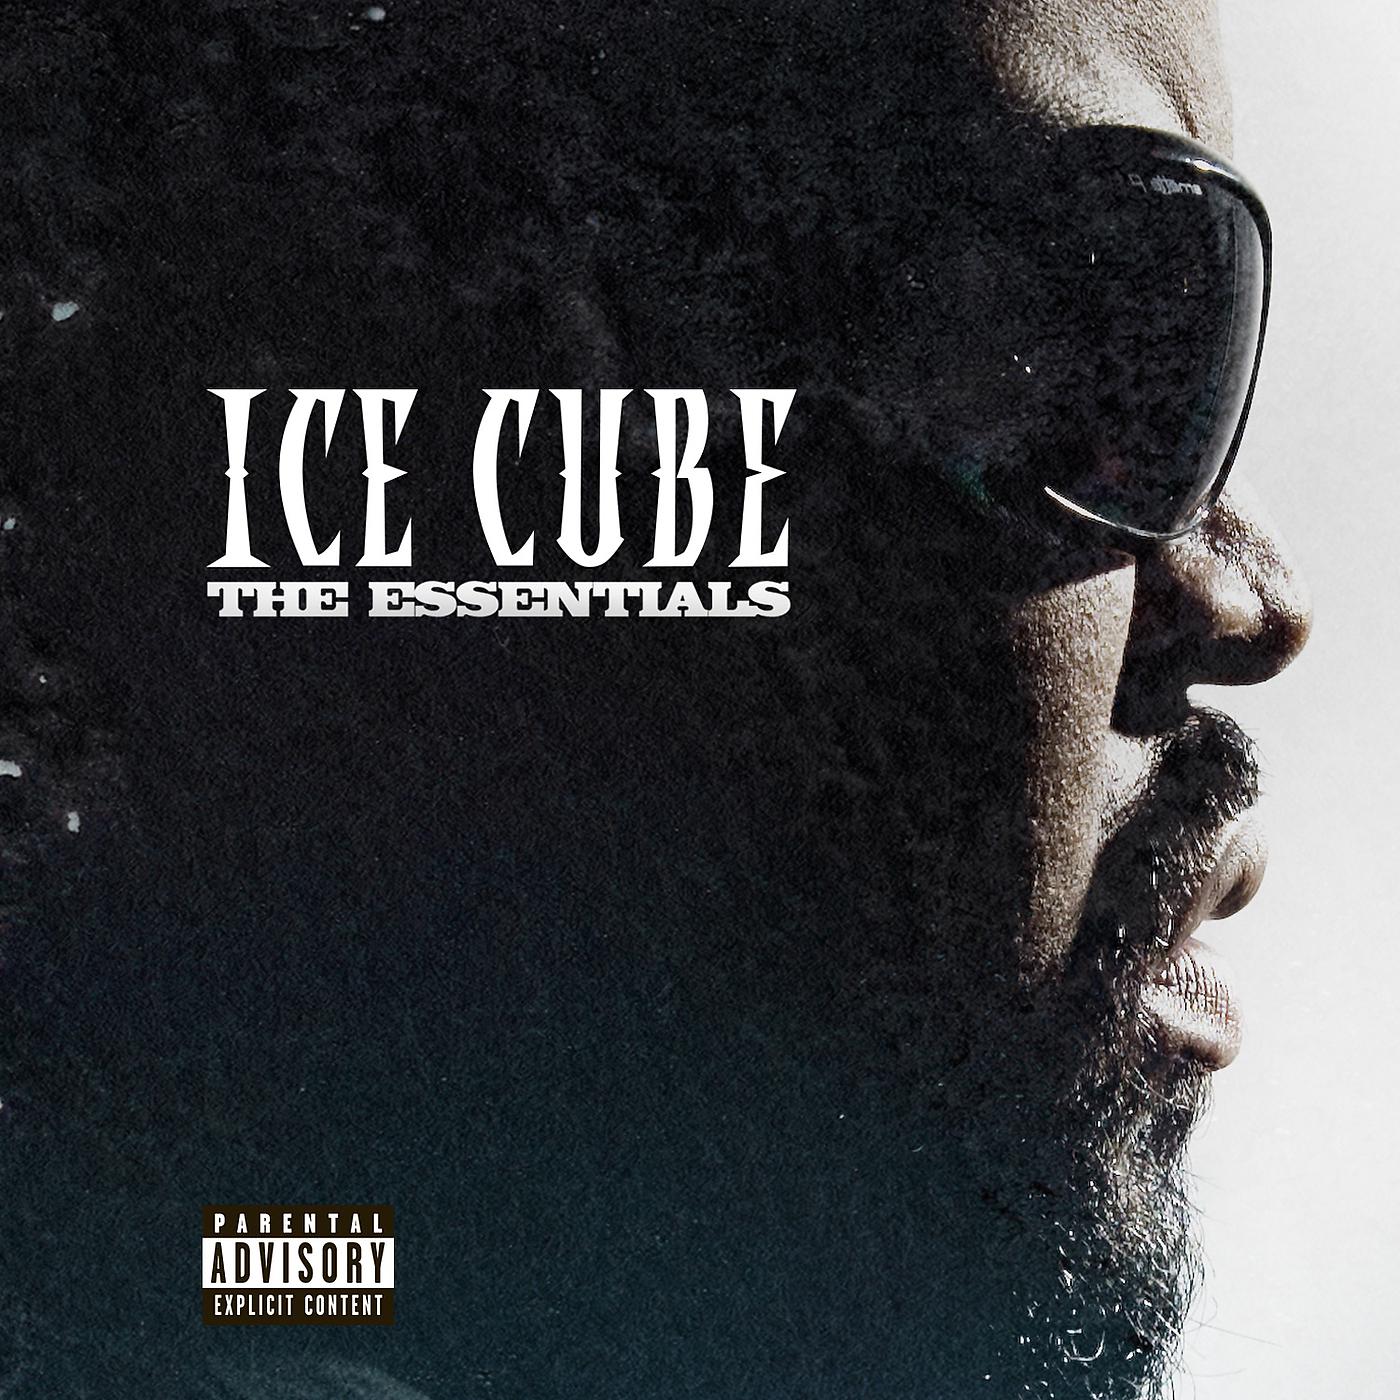 Ice cube us